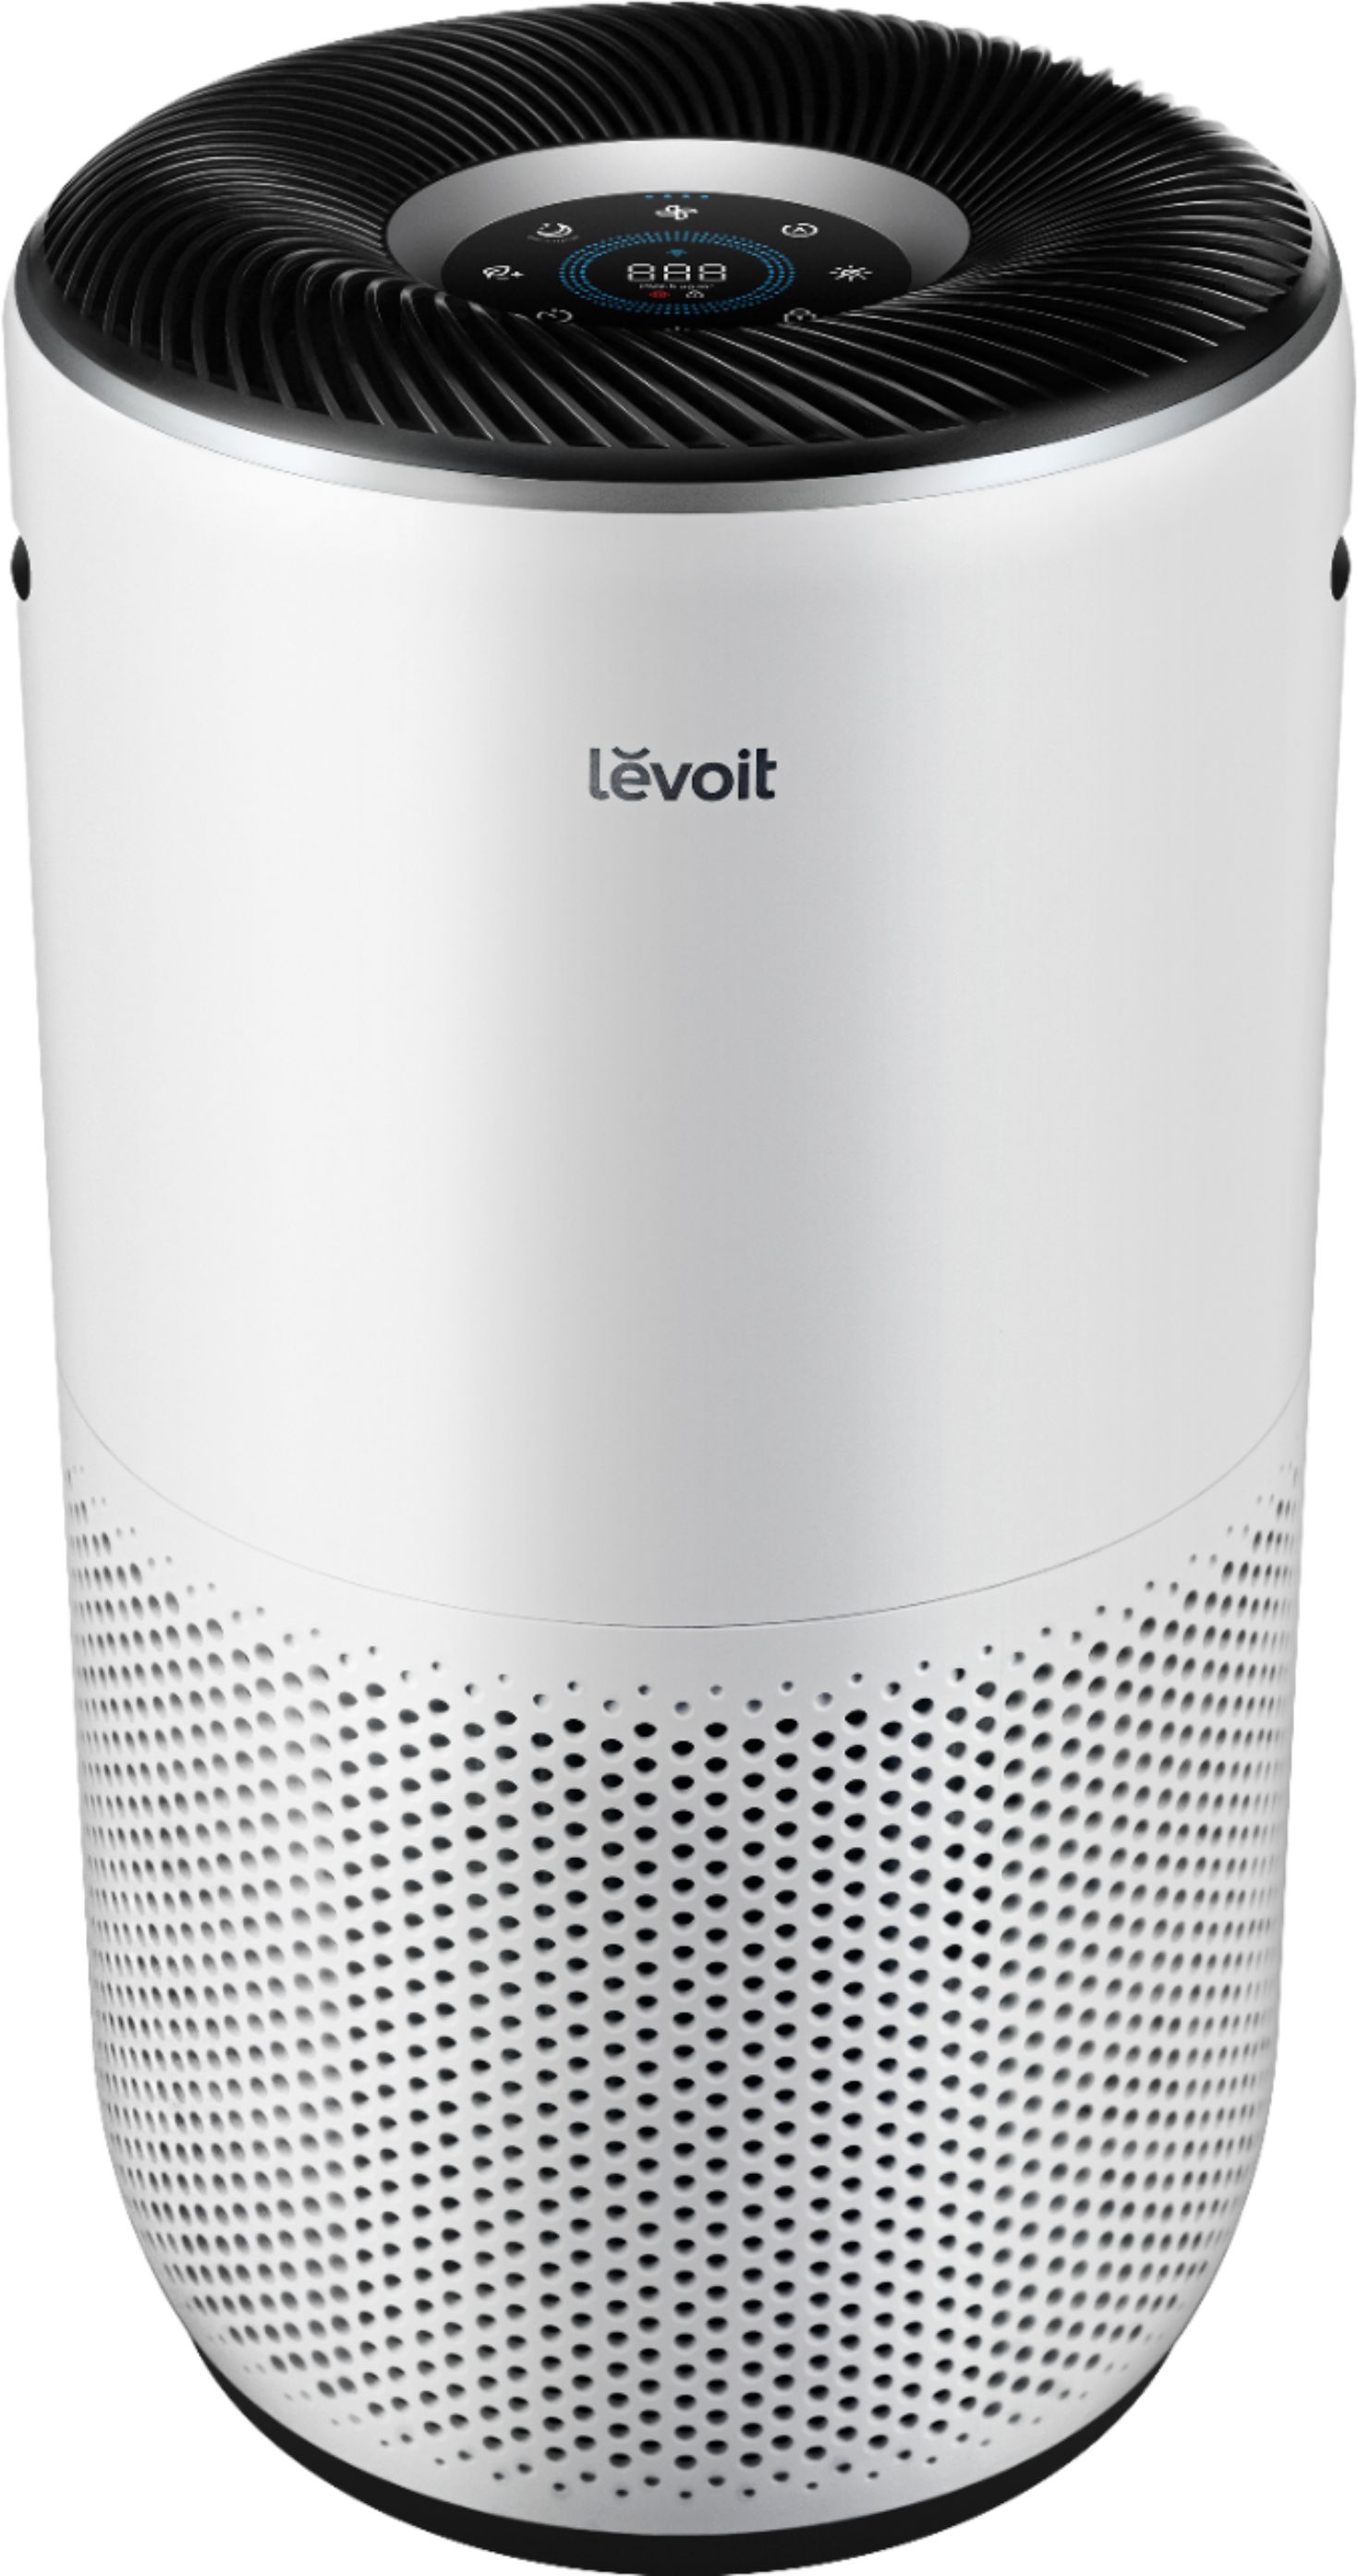 We Review… the Levoit Core 400S Smart True HEPA Air Purifier